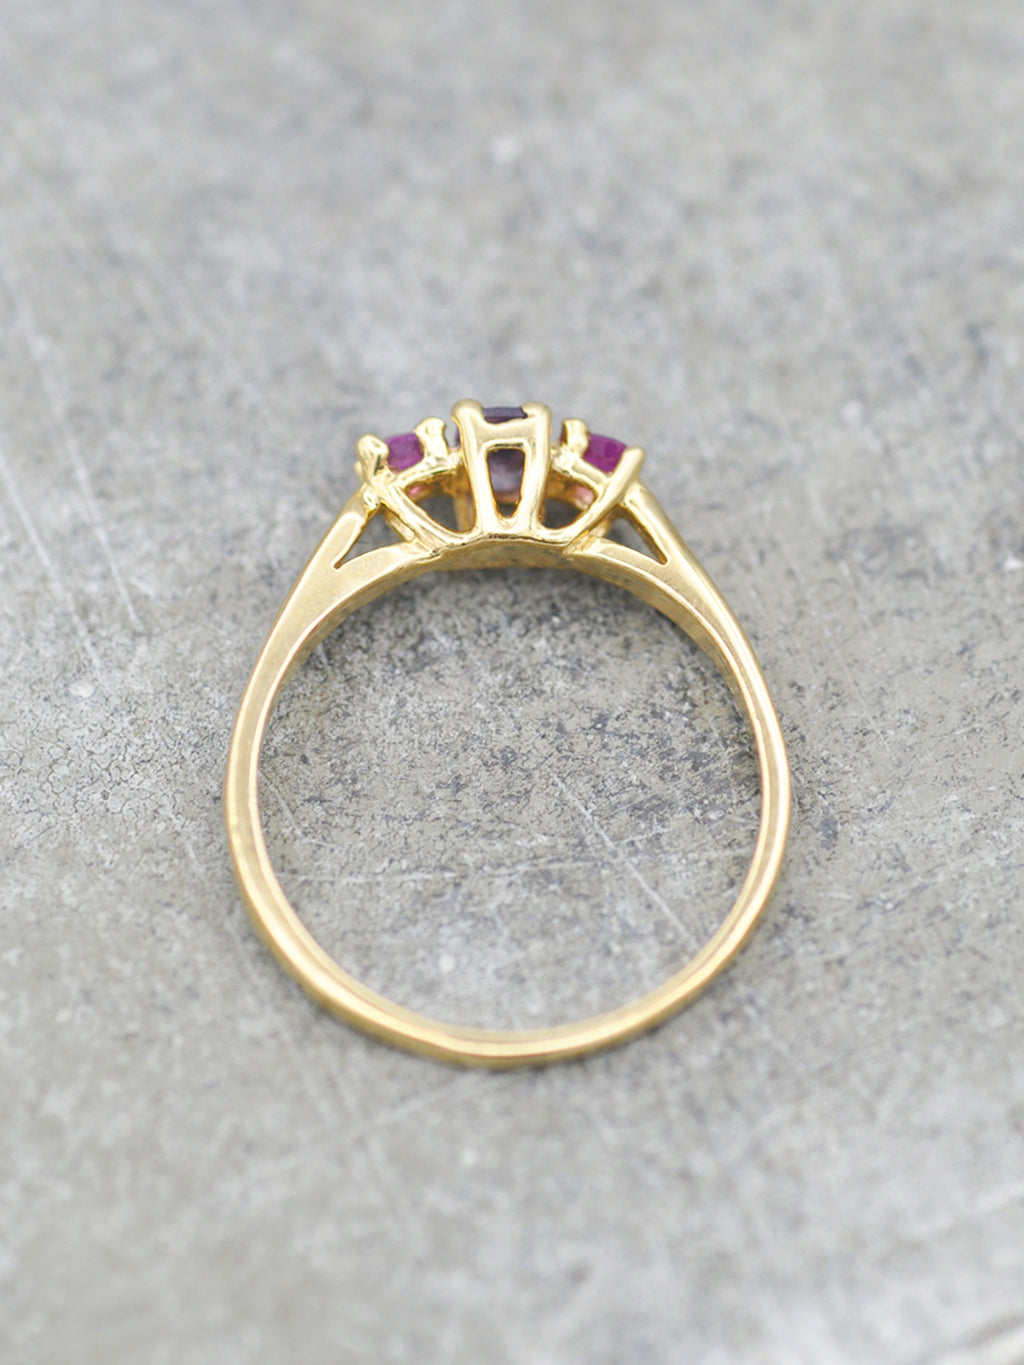 14K Lilac Sapphire + Ruby Ring